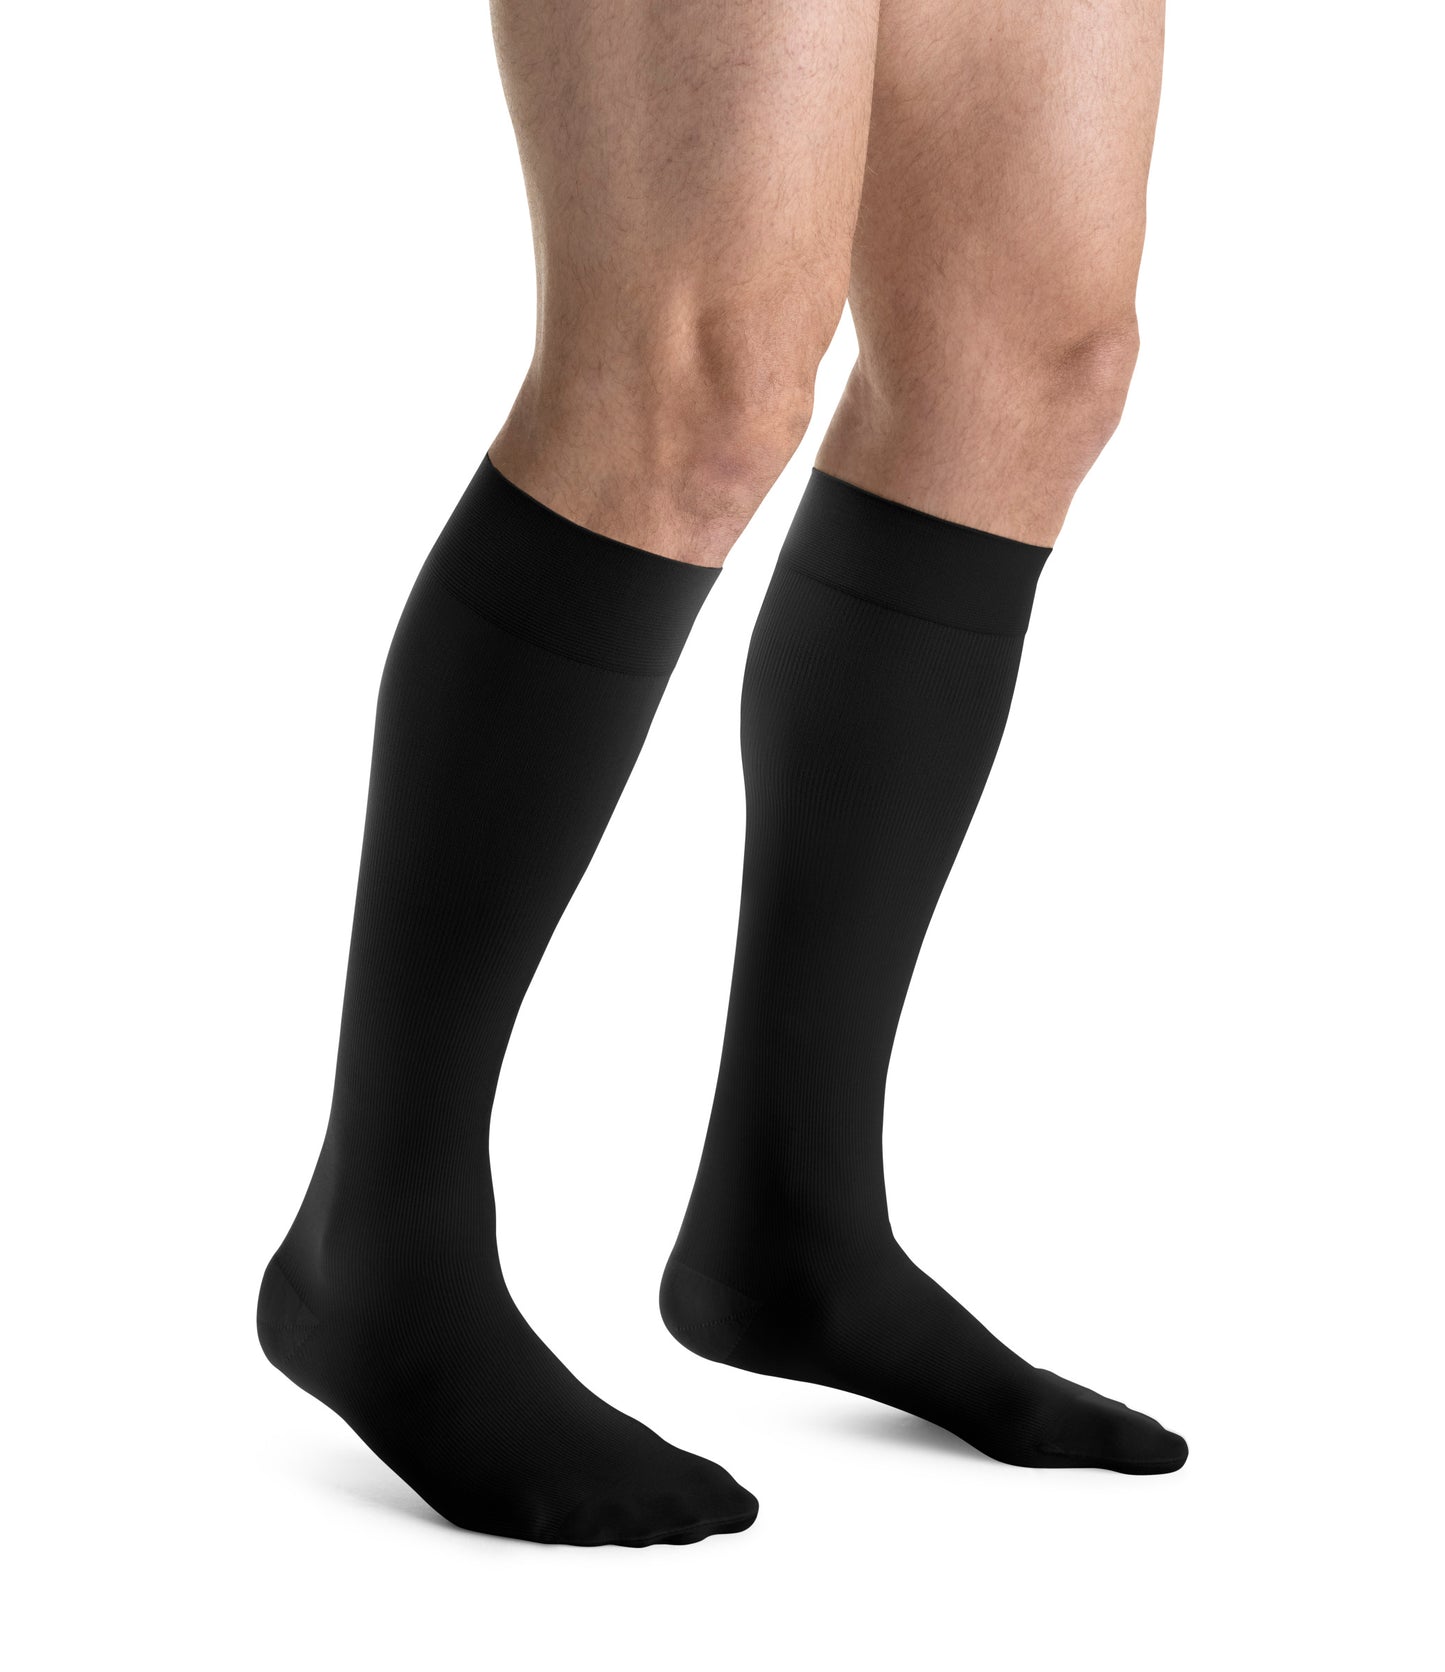 JOBST forMen Compression Socks 15-20 mmHg Knee High Closed Toe